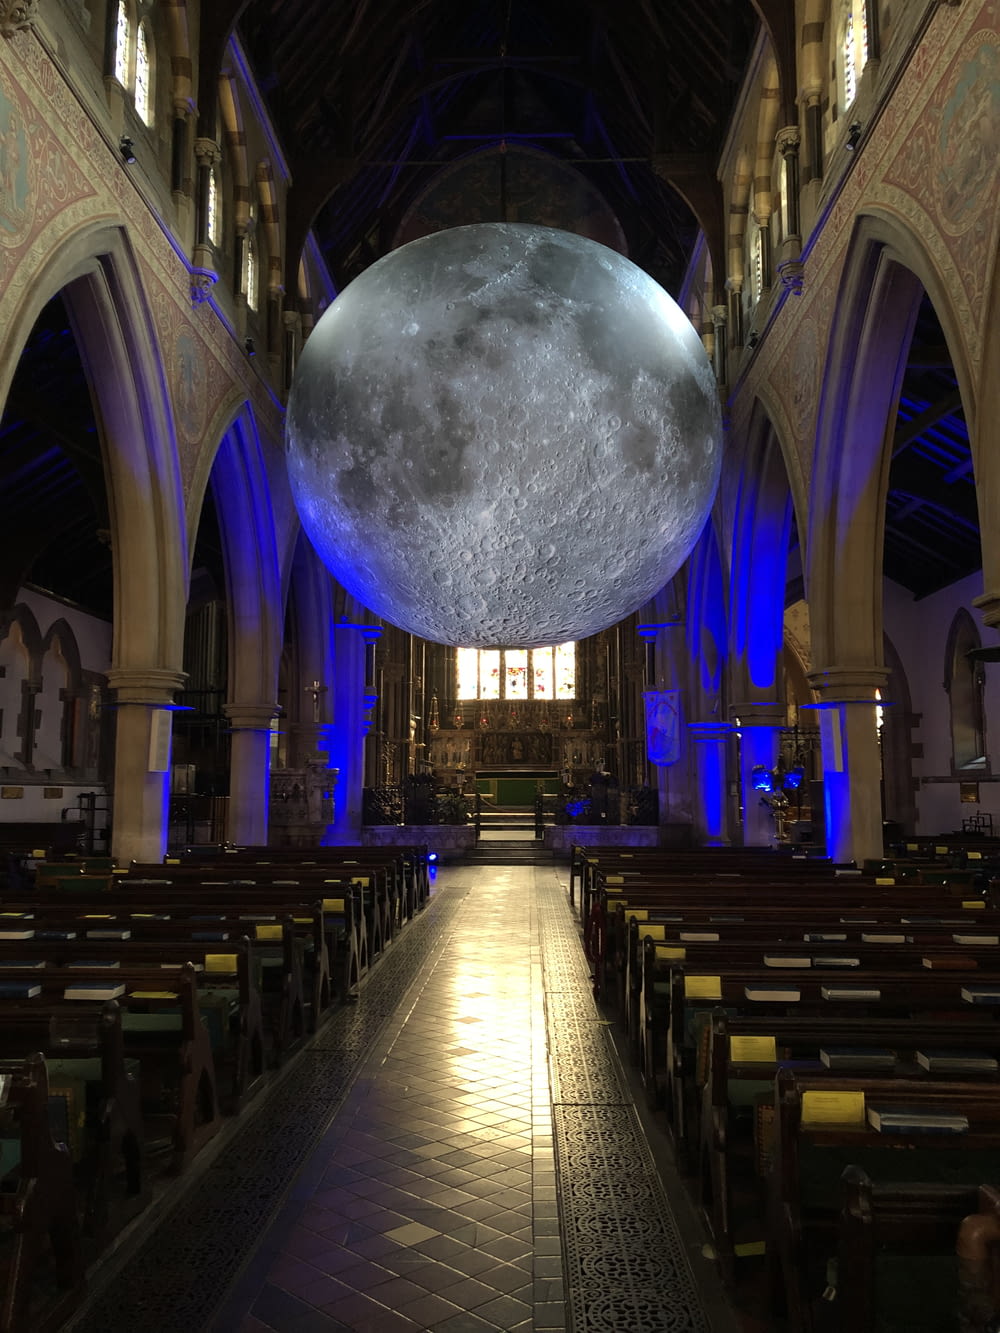 moon model inside a church